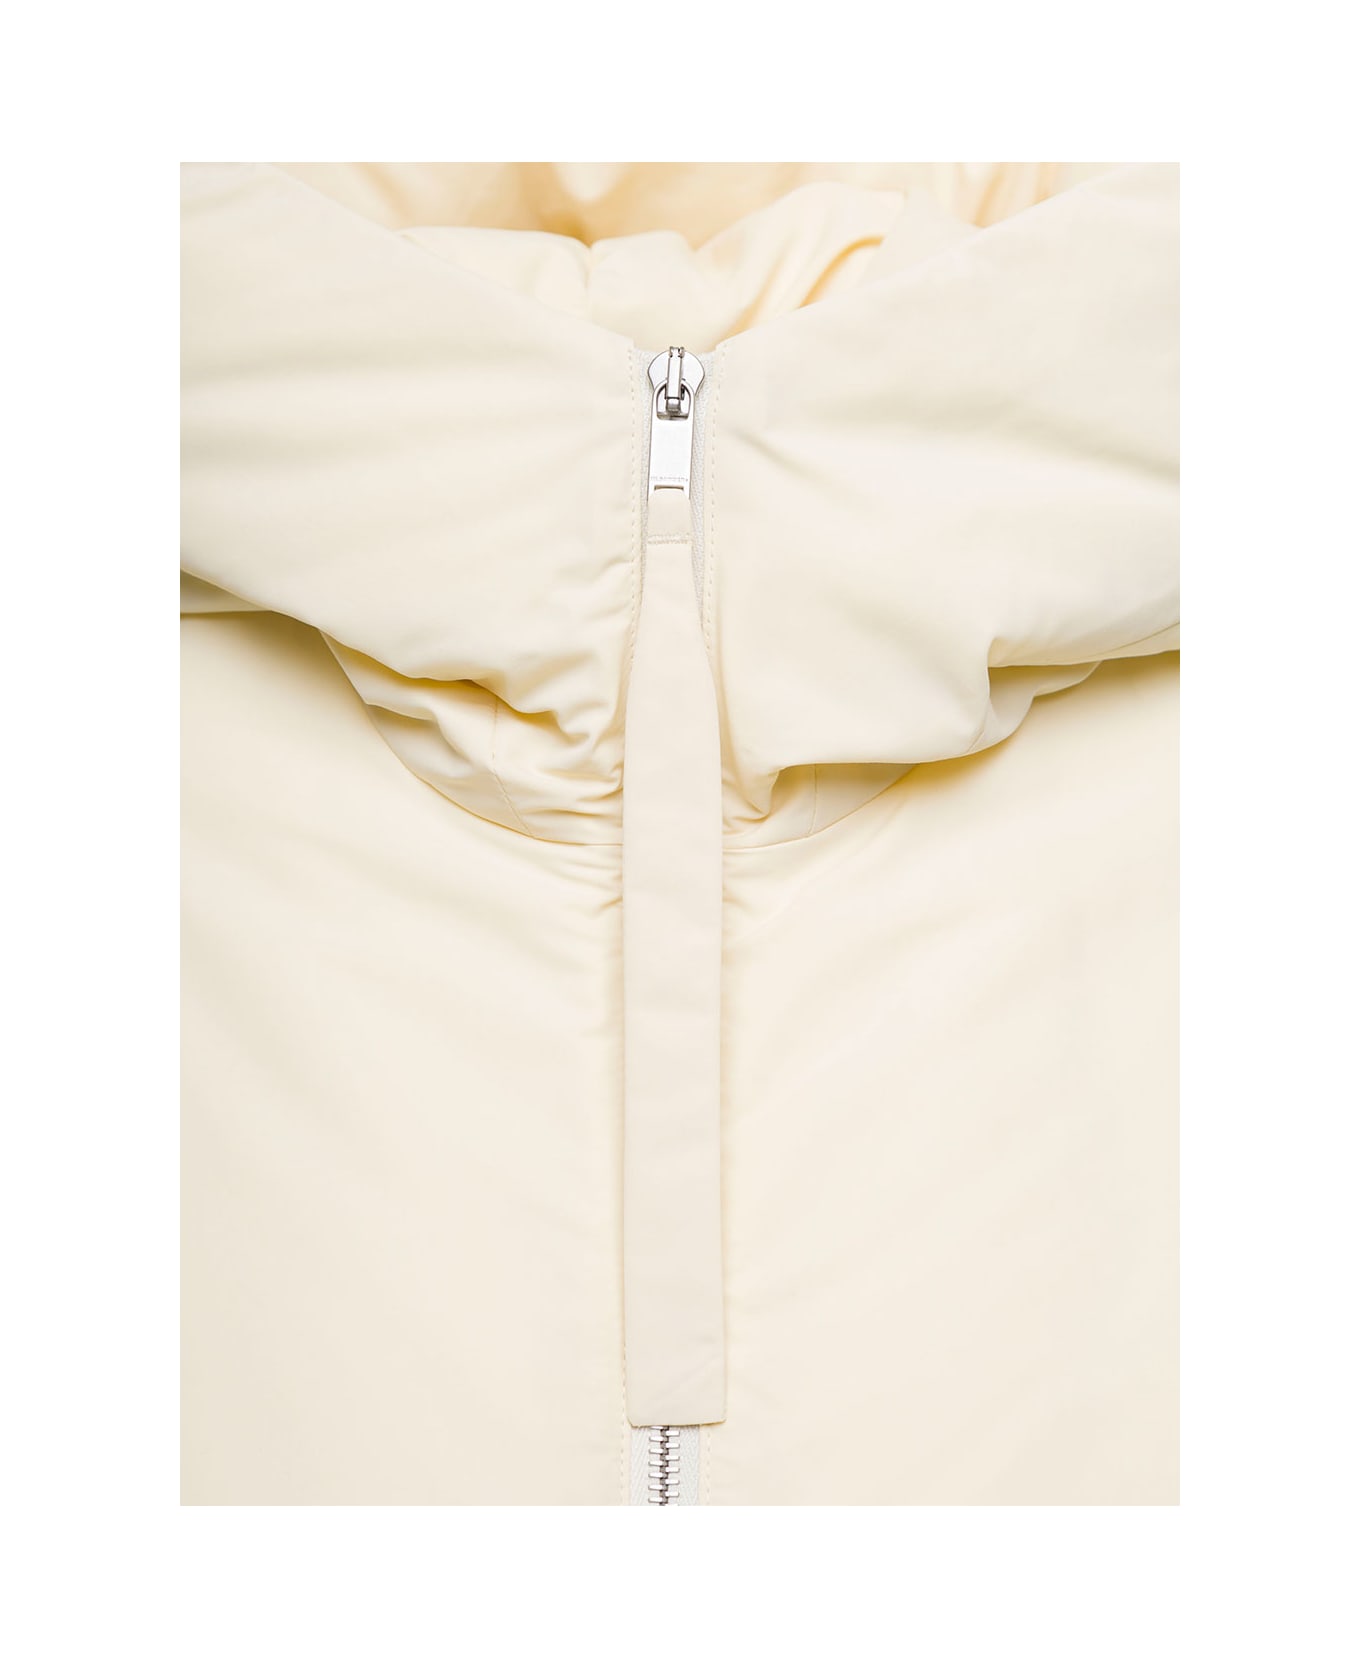 Jil Sander Cream Hooded Down Jacket With Zip In Nylon Woman - White ジャケット